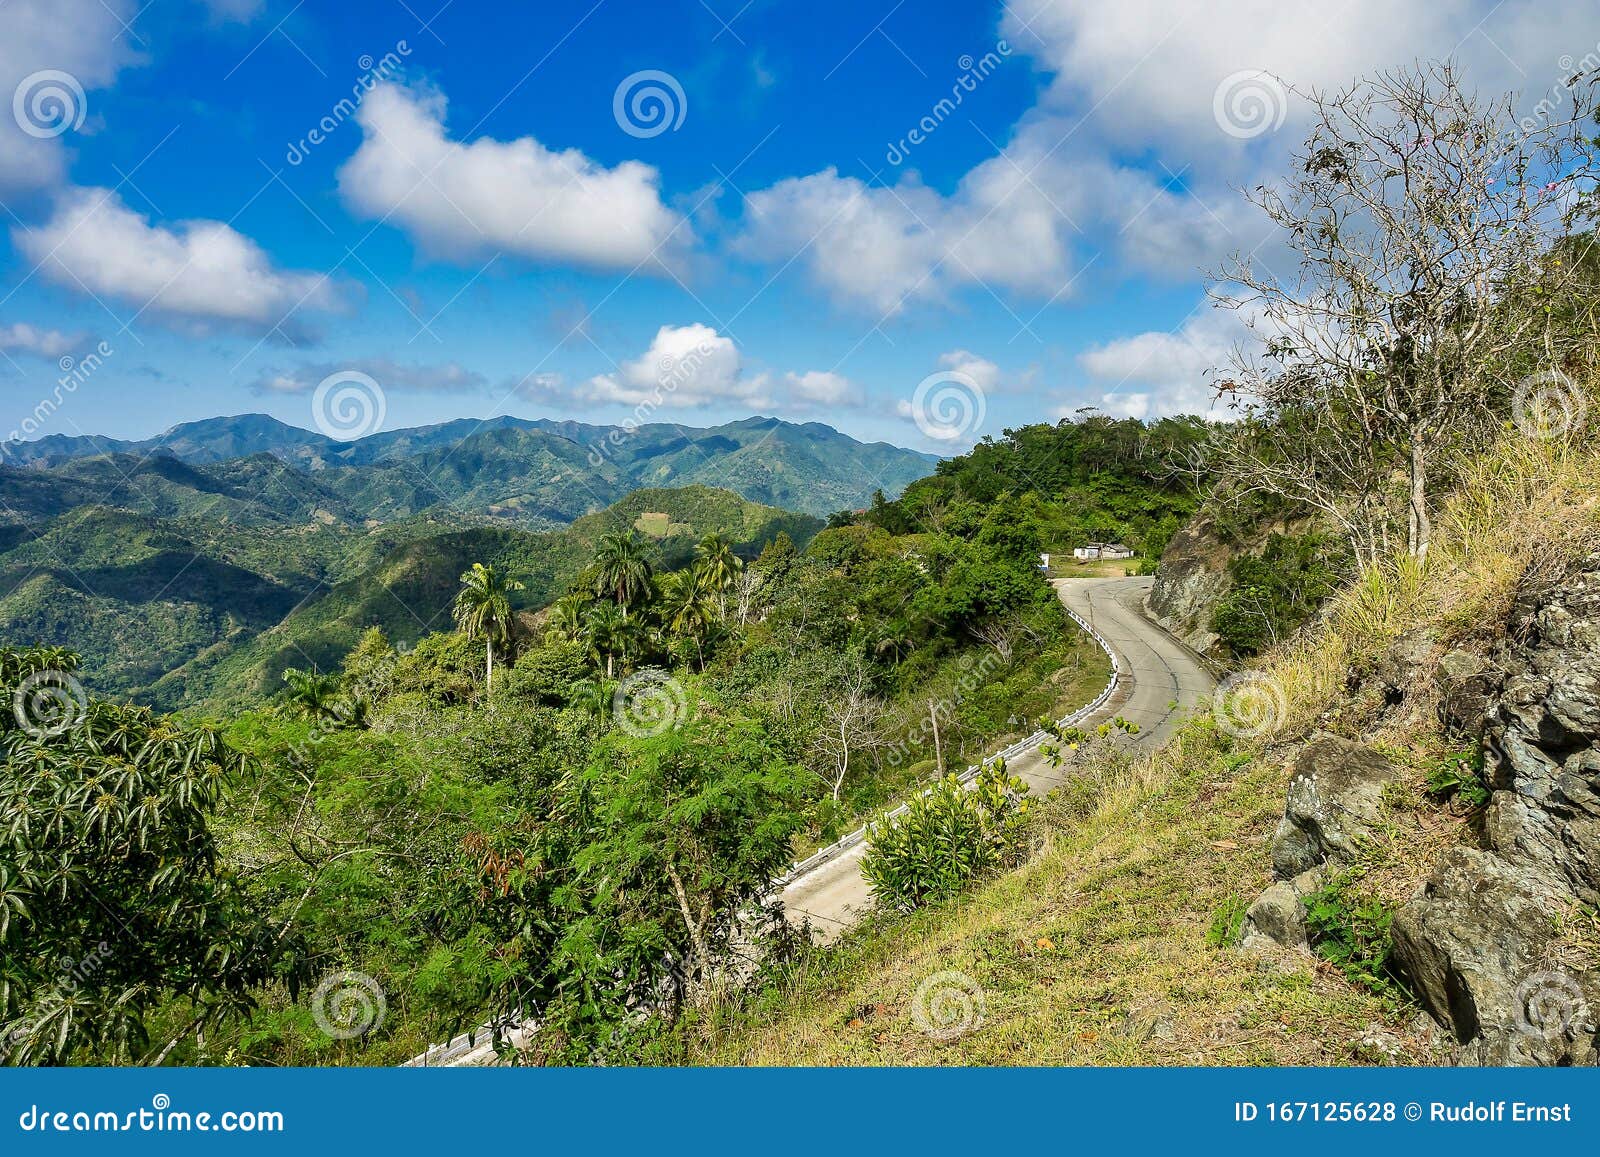 mountains on the road of la farola near baracoa in cuba